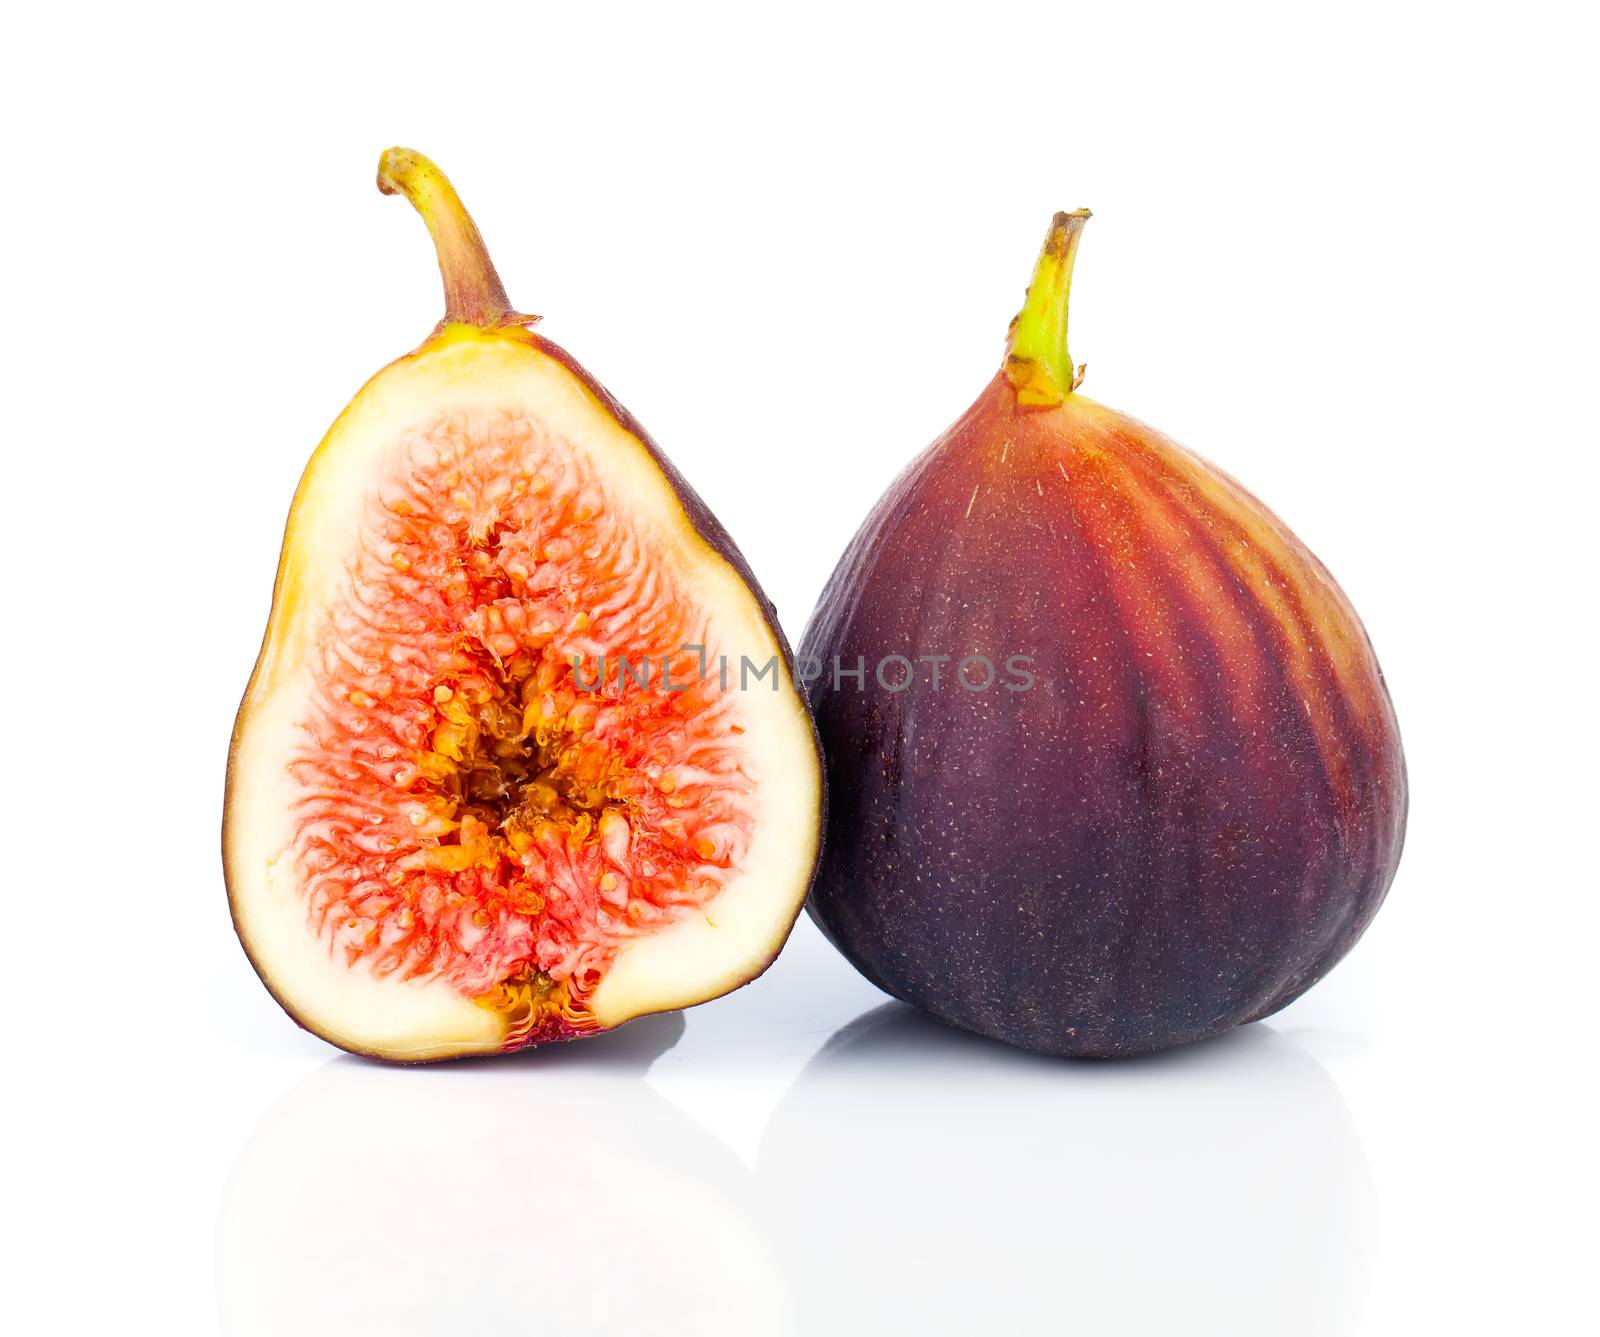 fresh figs on a white background by motorolka